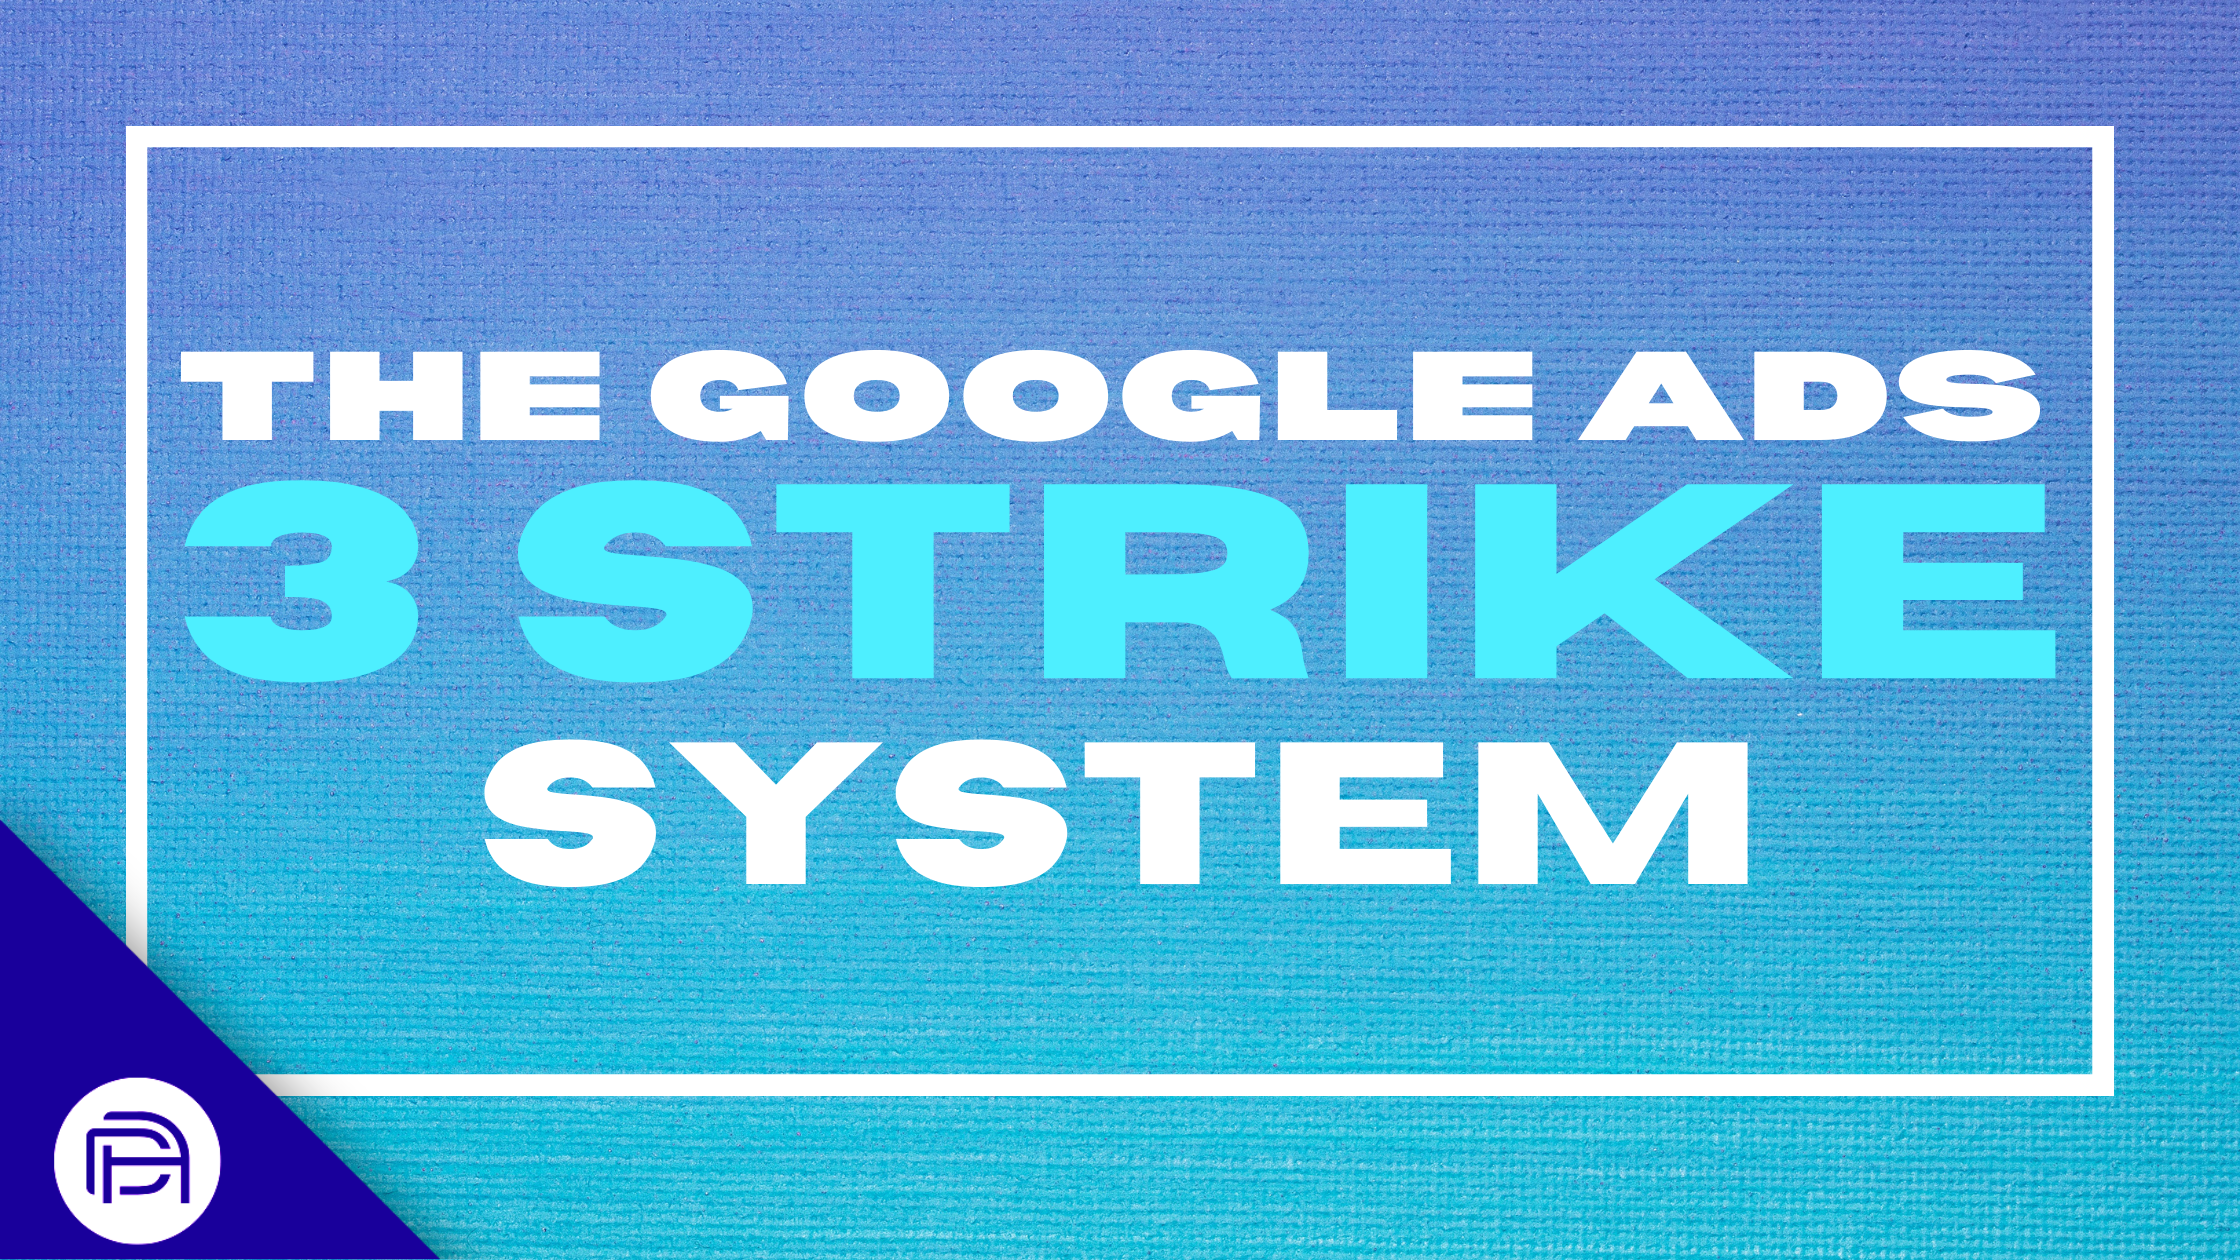 The Google Ads 3 Strikes System